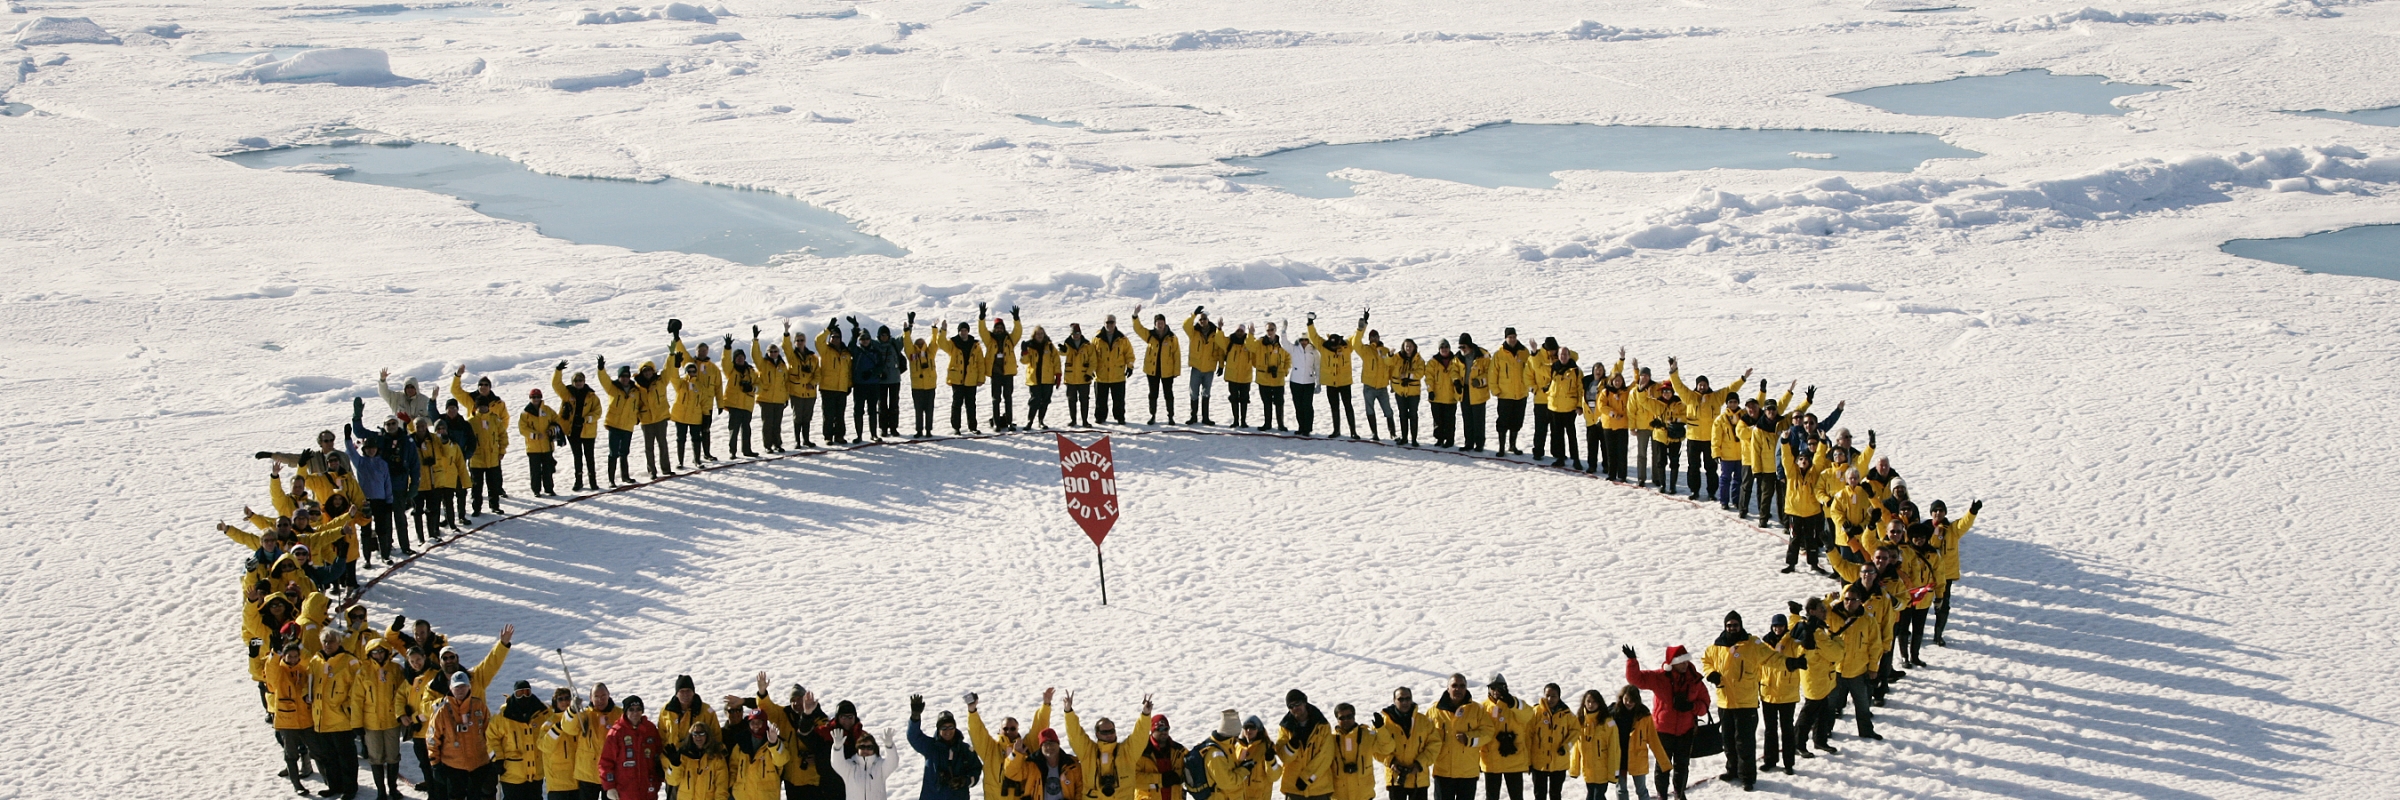 Celebration at the North Pole 